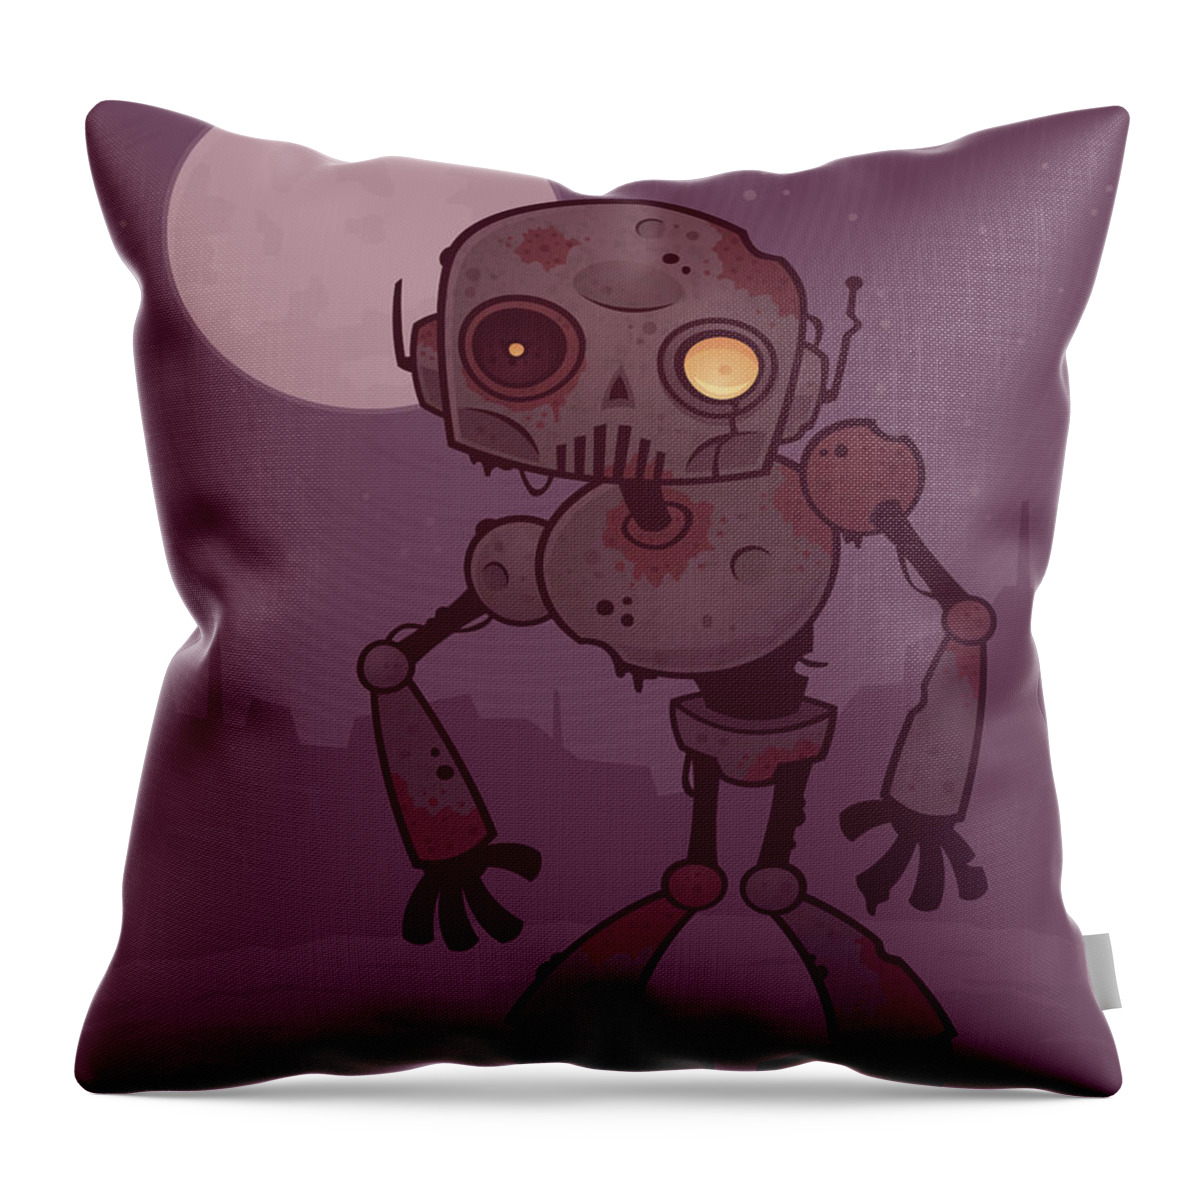 Zombie Throw Pillow featuring the digital art Rusty Zombie Robot by John Schwegel